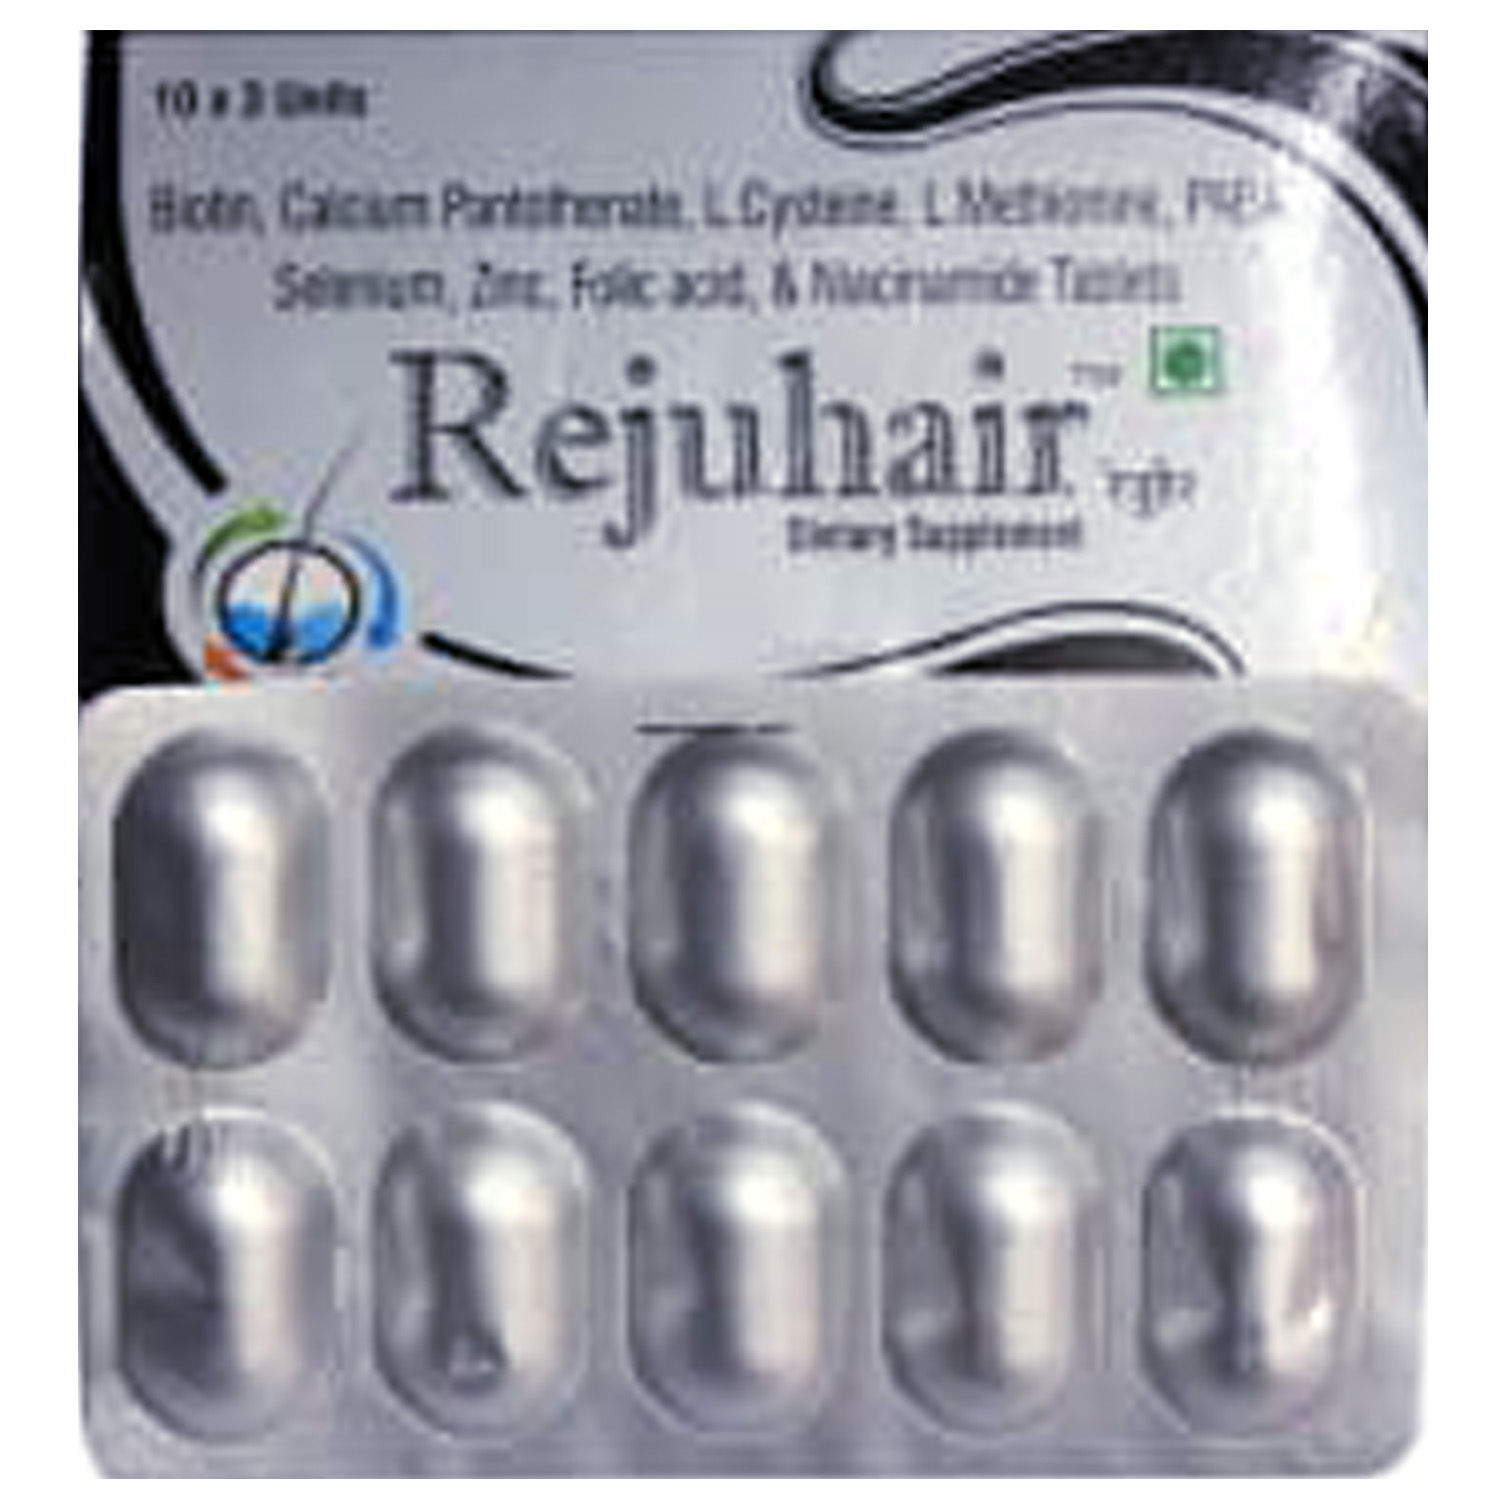 Buy Rejuhair, 10 Tablets Online